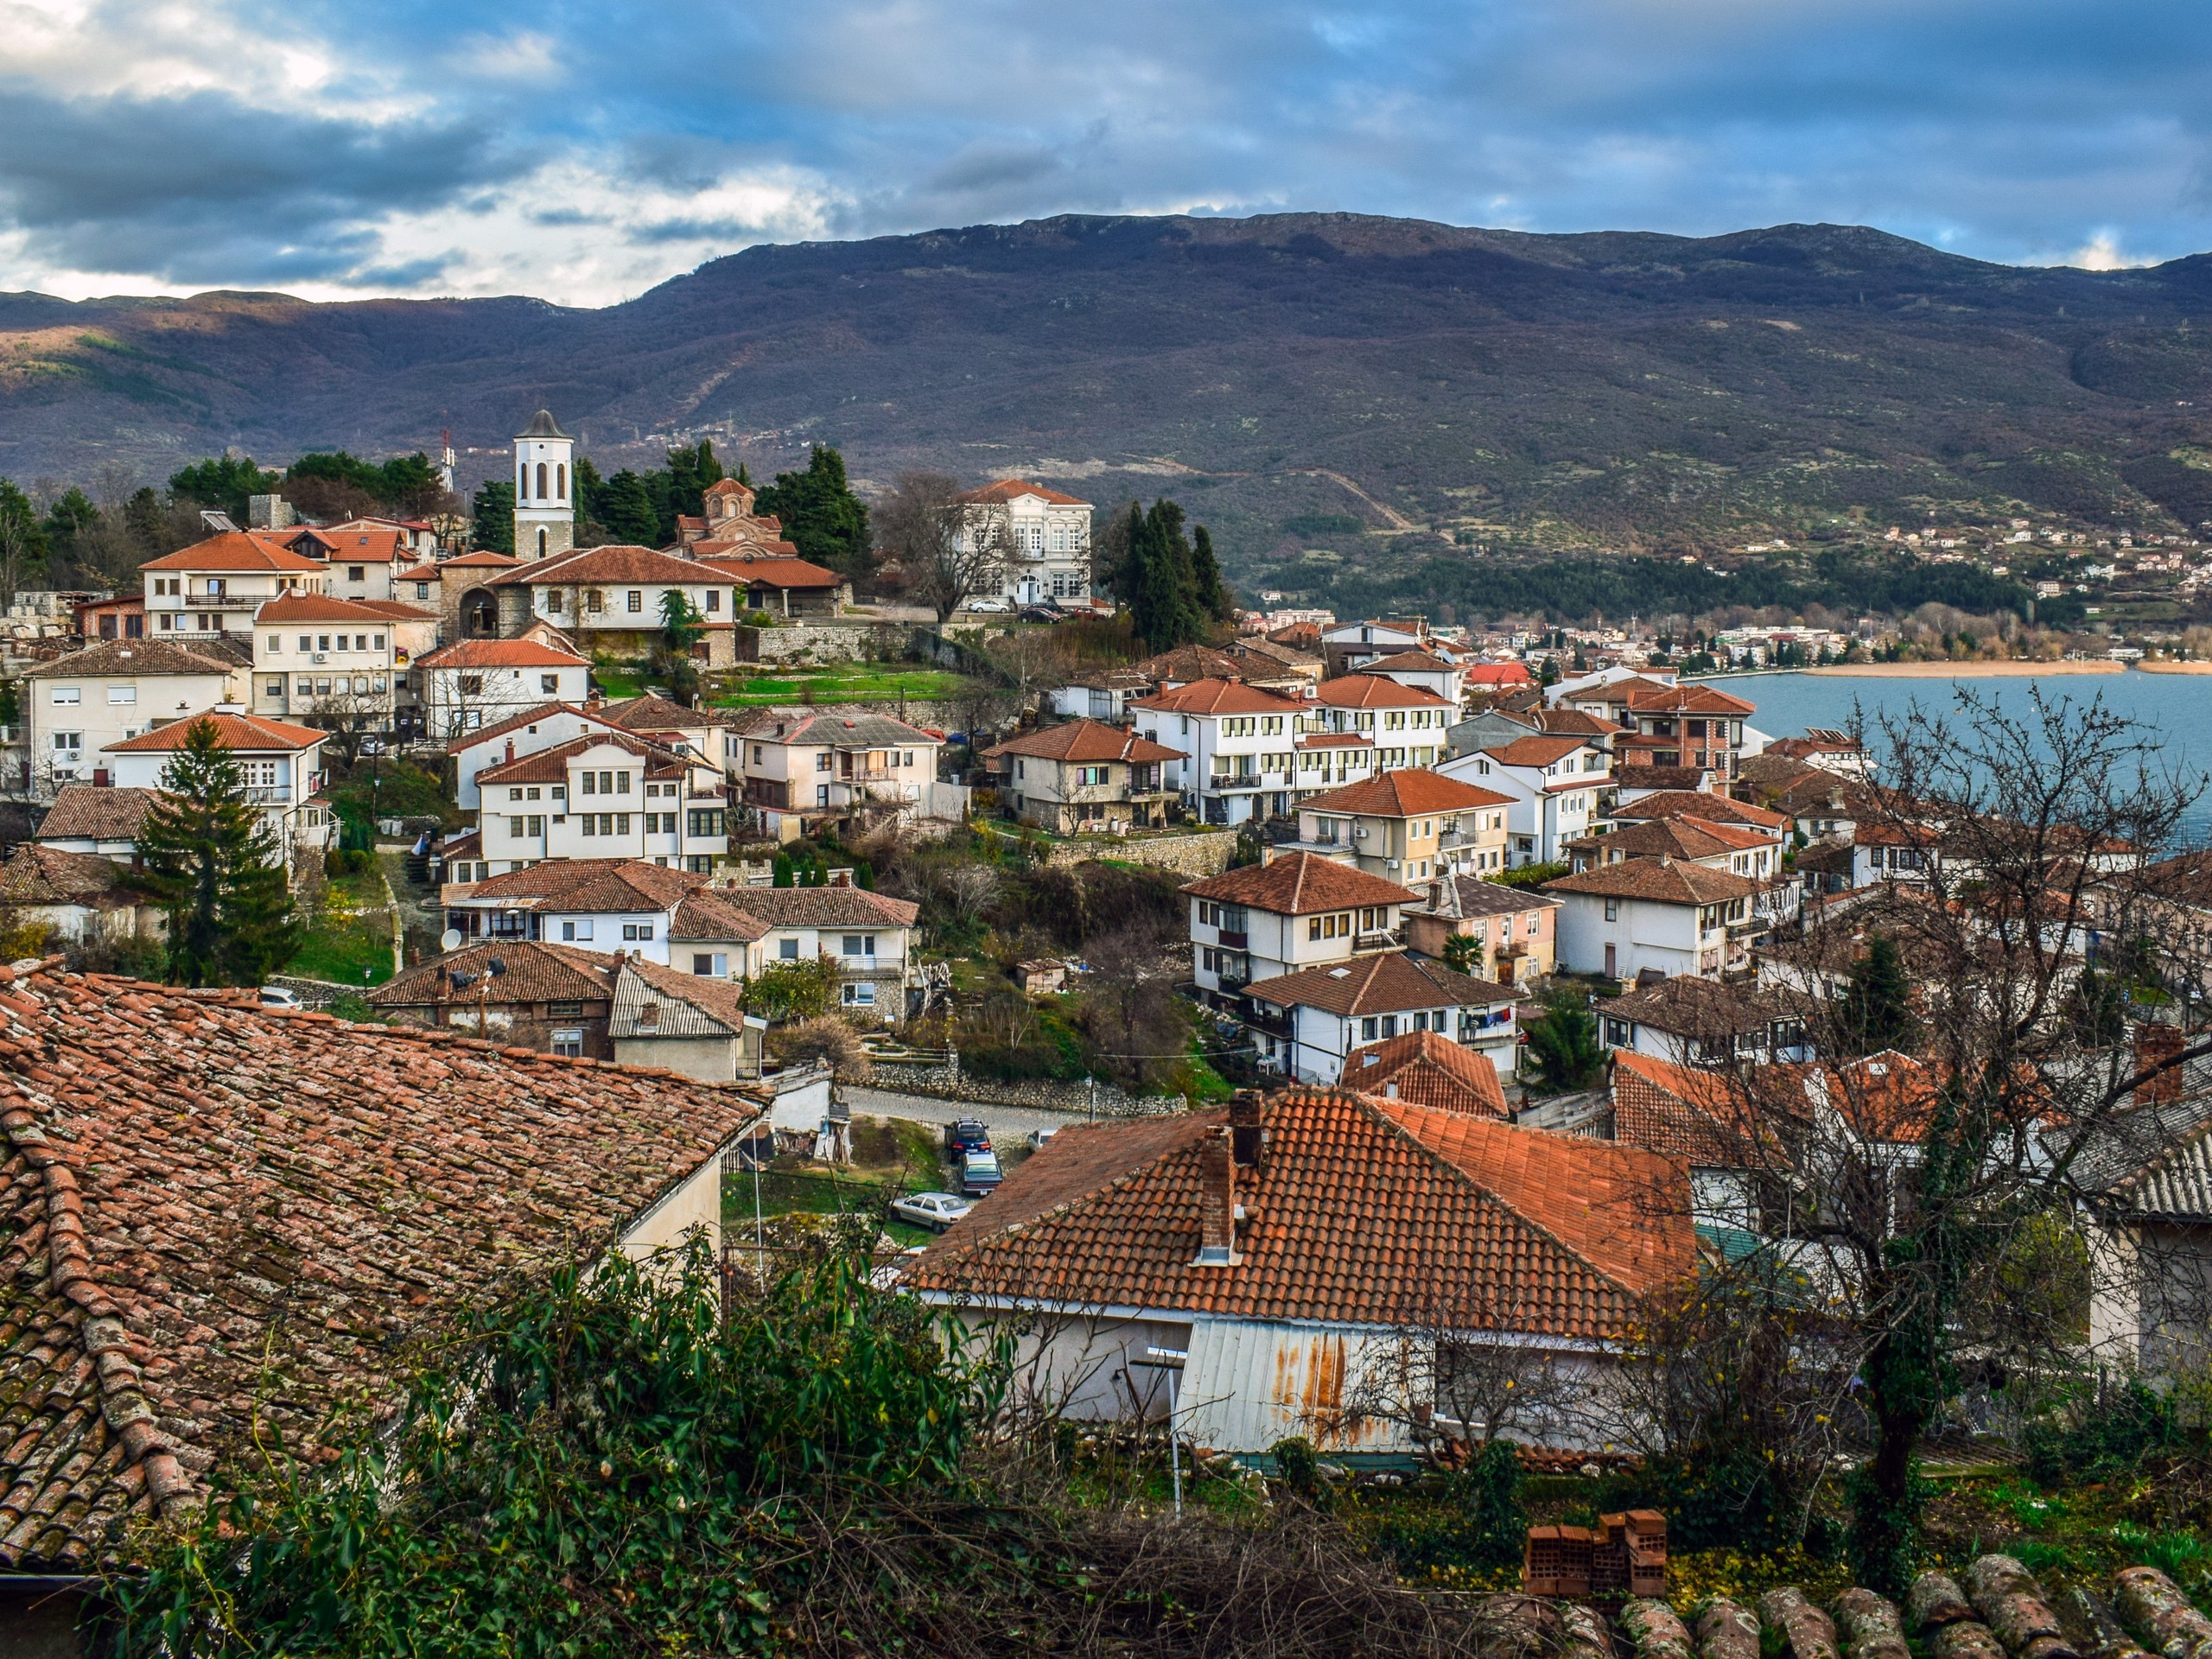 Ohrid oldtown in North Macedonia